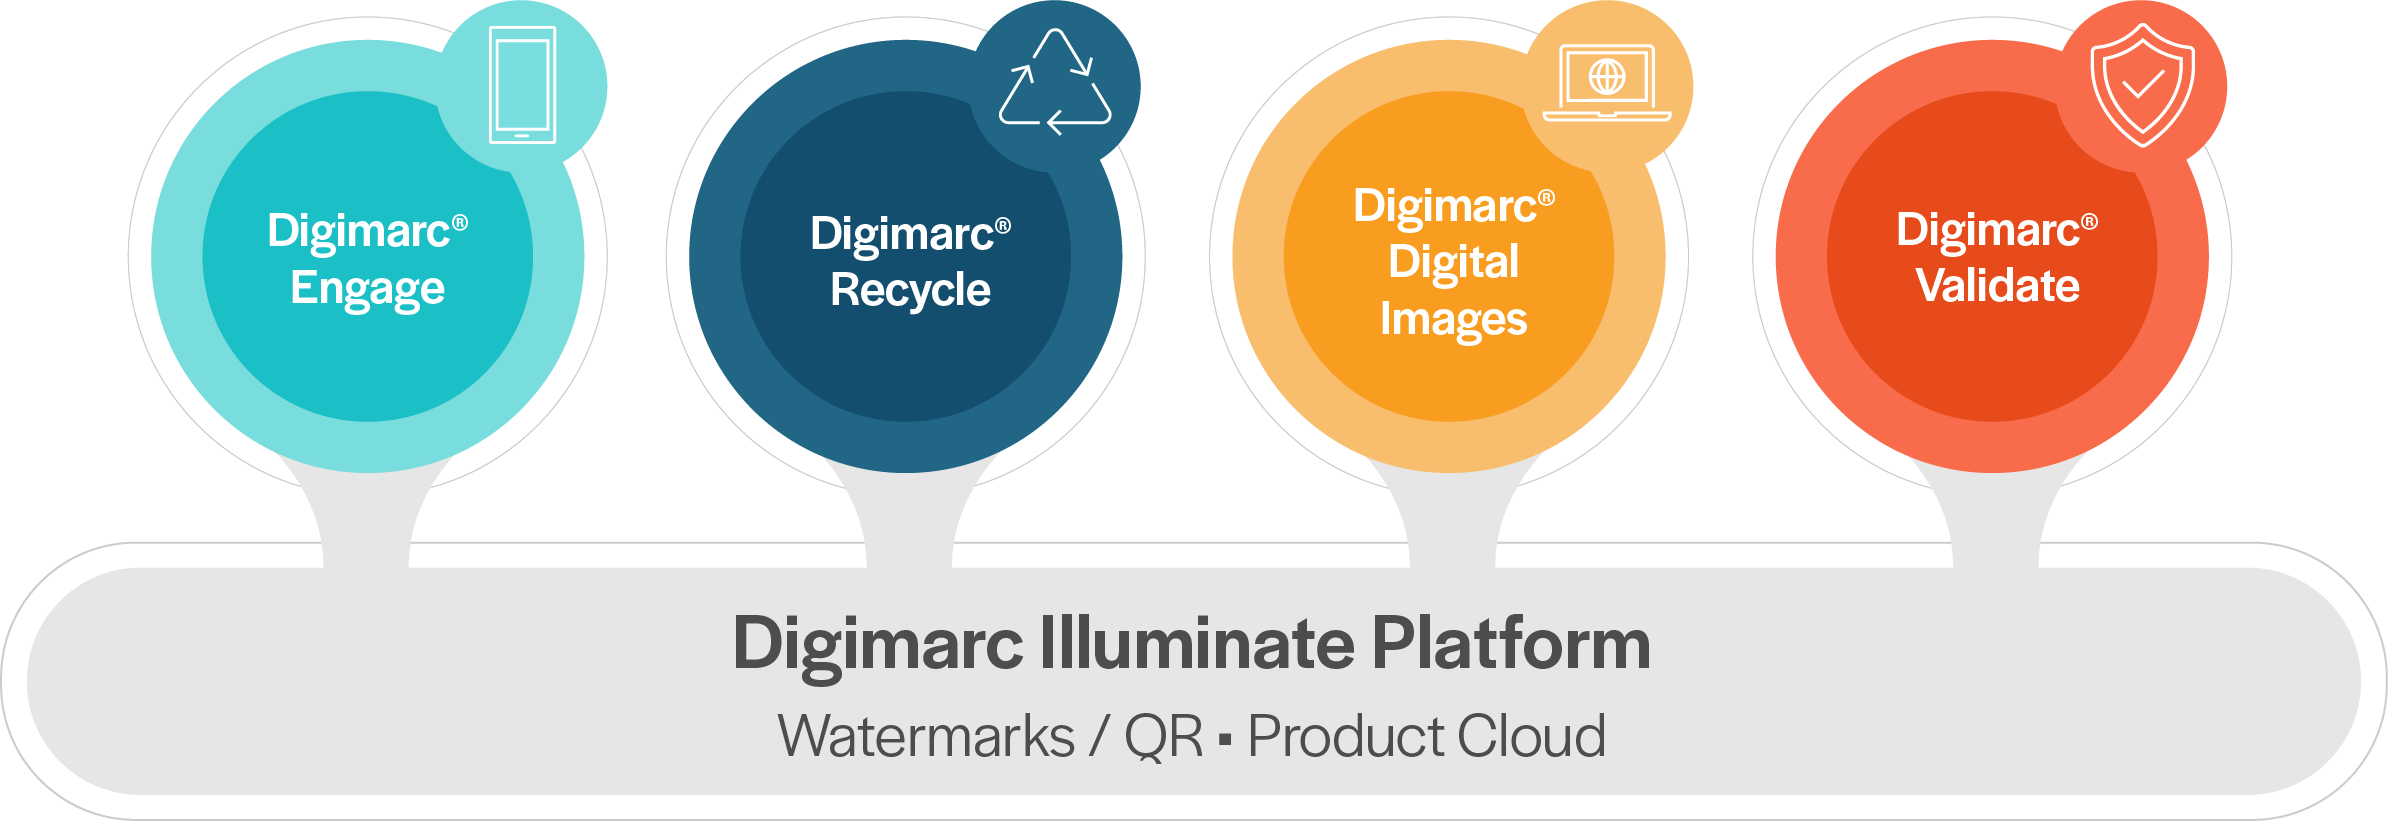 Digimarc Product Digitization Platform graphic